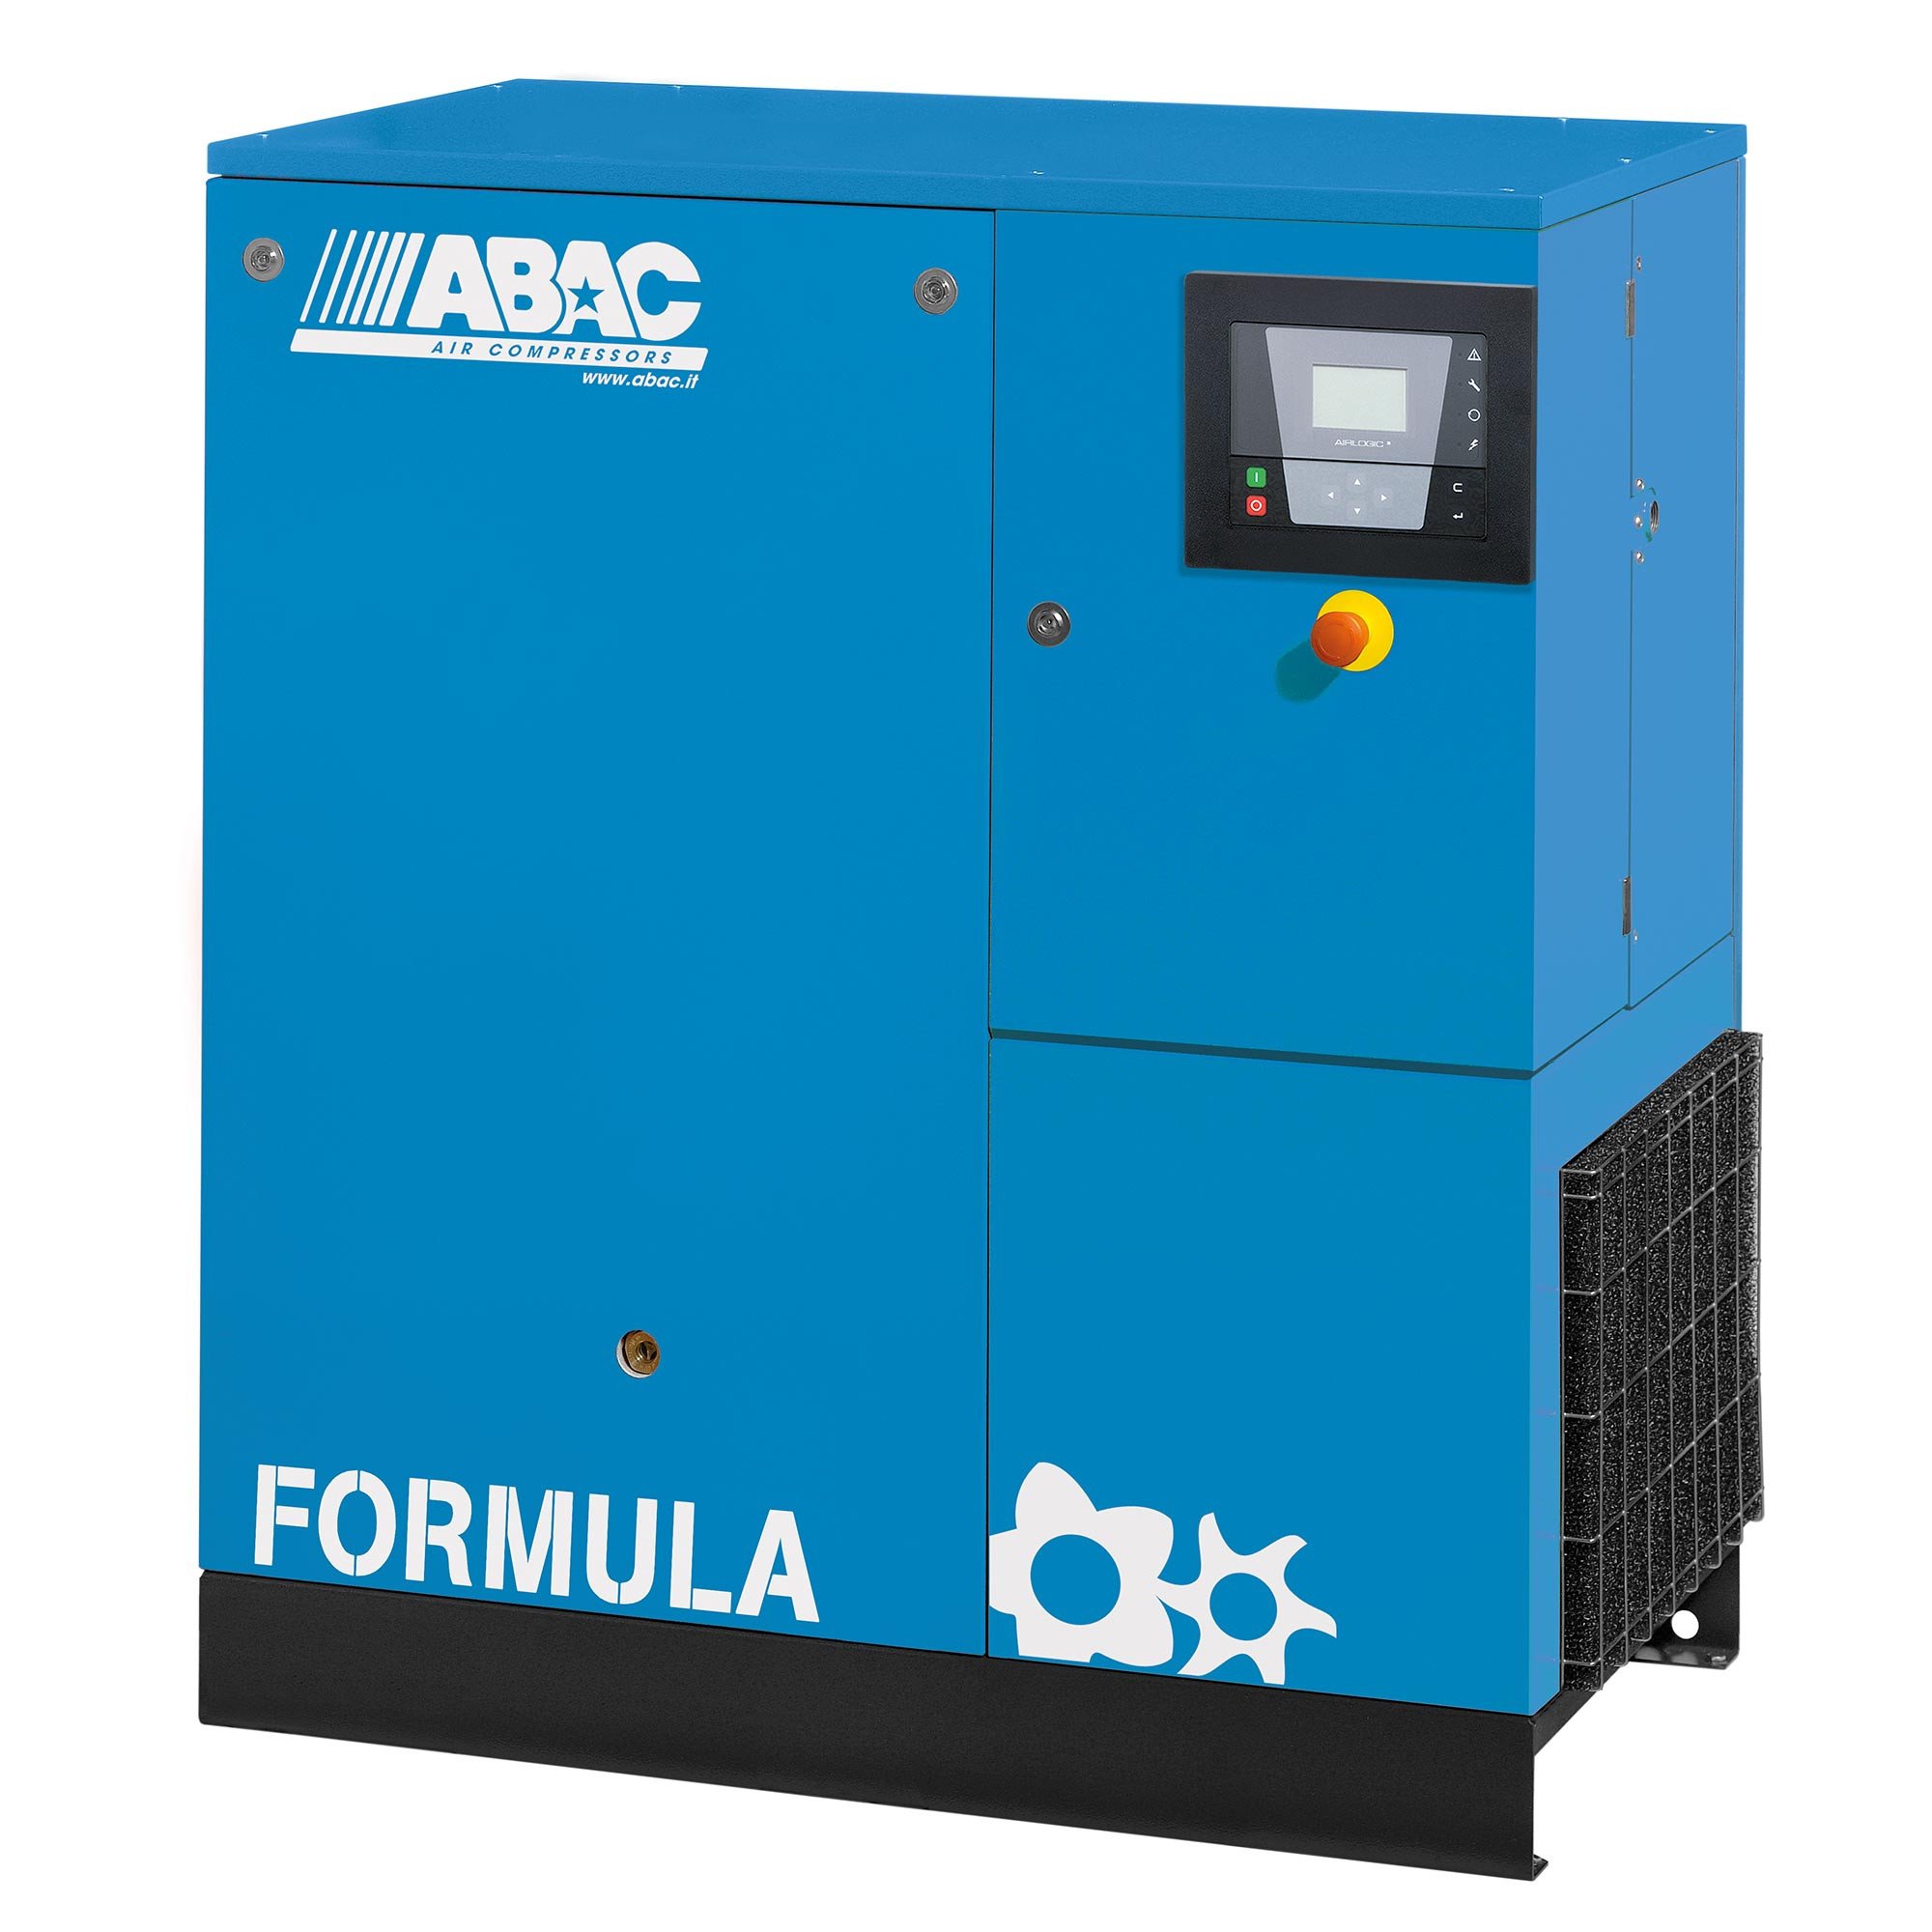 ABAC公式11千瓦固定速度旋转螺杆空气压缩机——基本单位